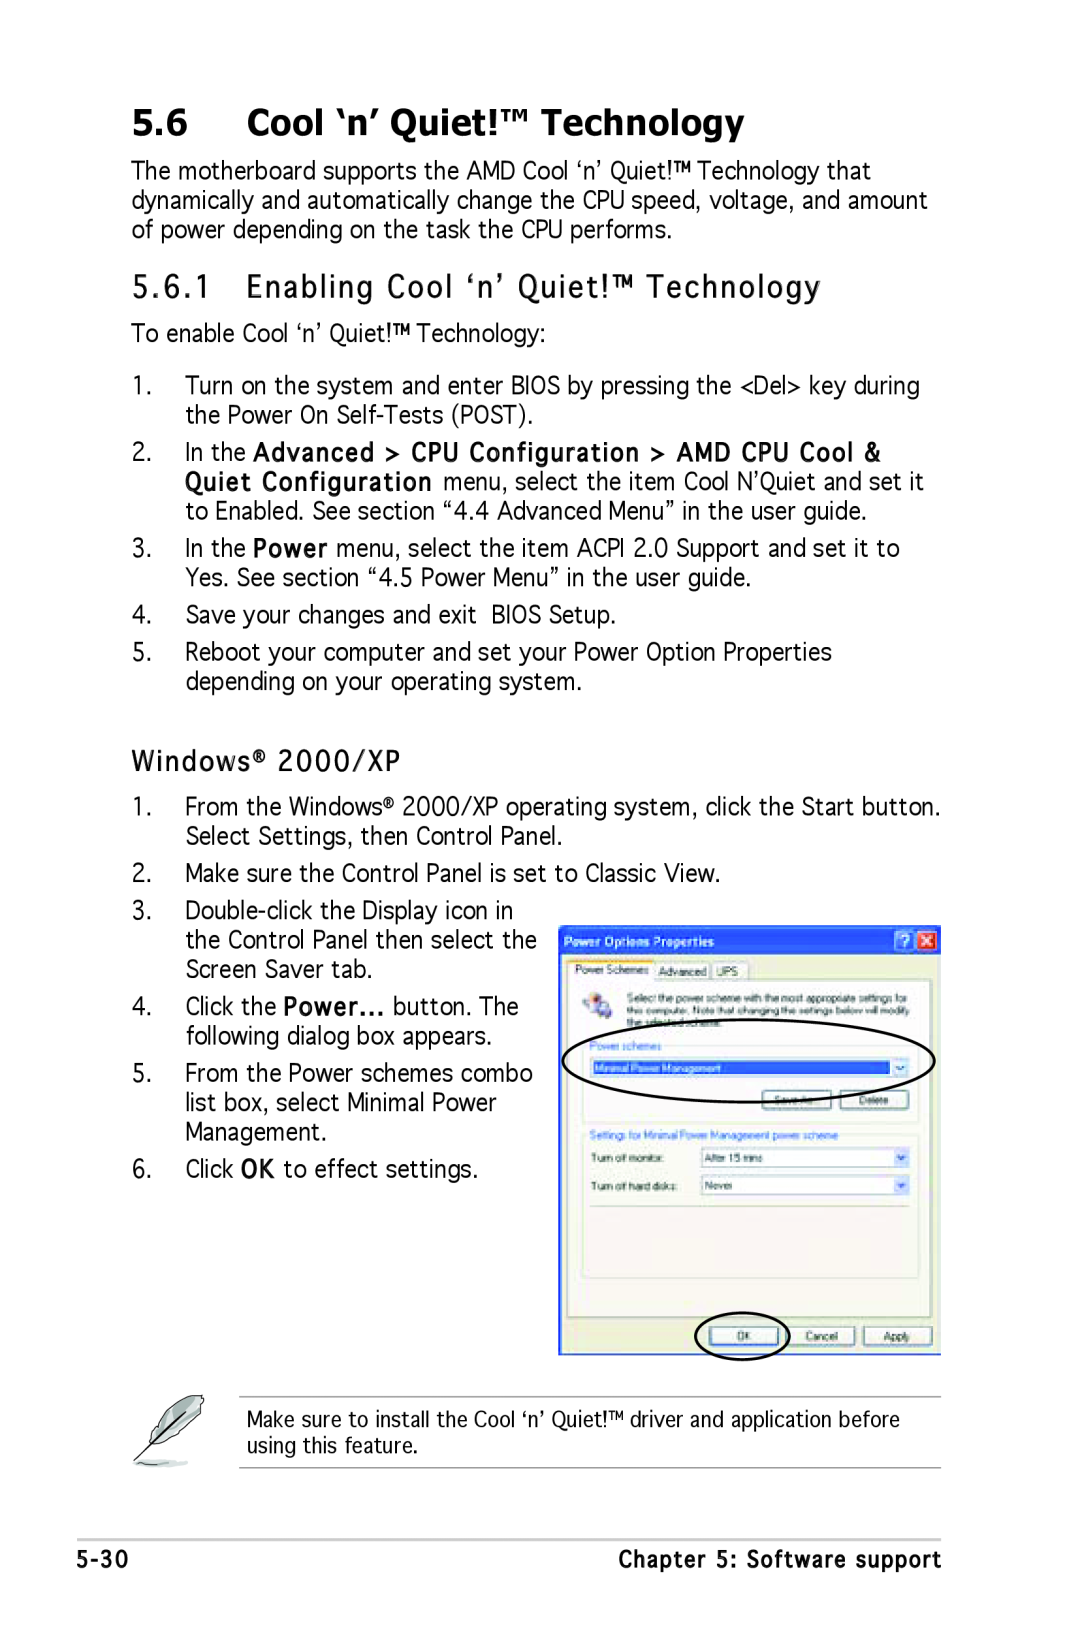 Asus A8N-SLI SE manual Cool ‘n’ Quiet! Technology, Enabling Cool ʻnʼ Quiet! Technology, Windows 2000/XP 